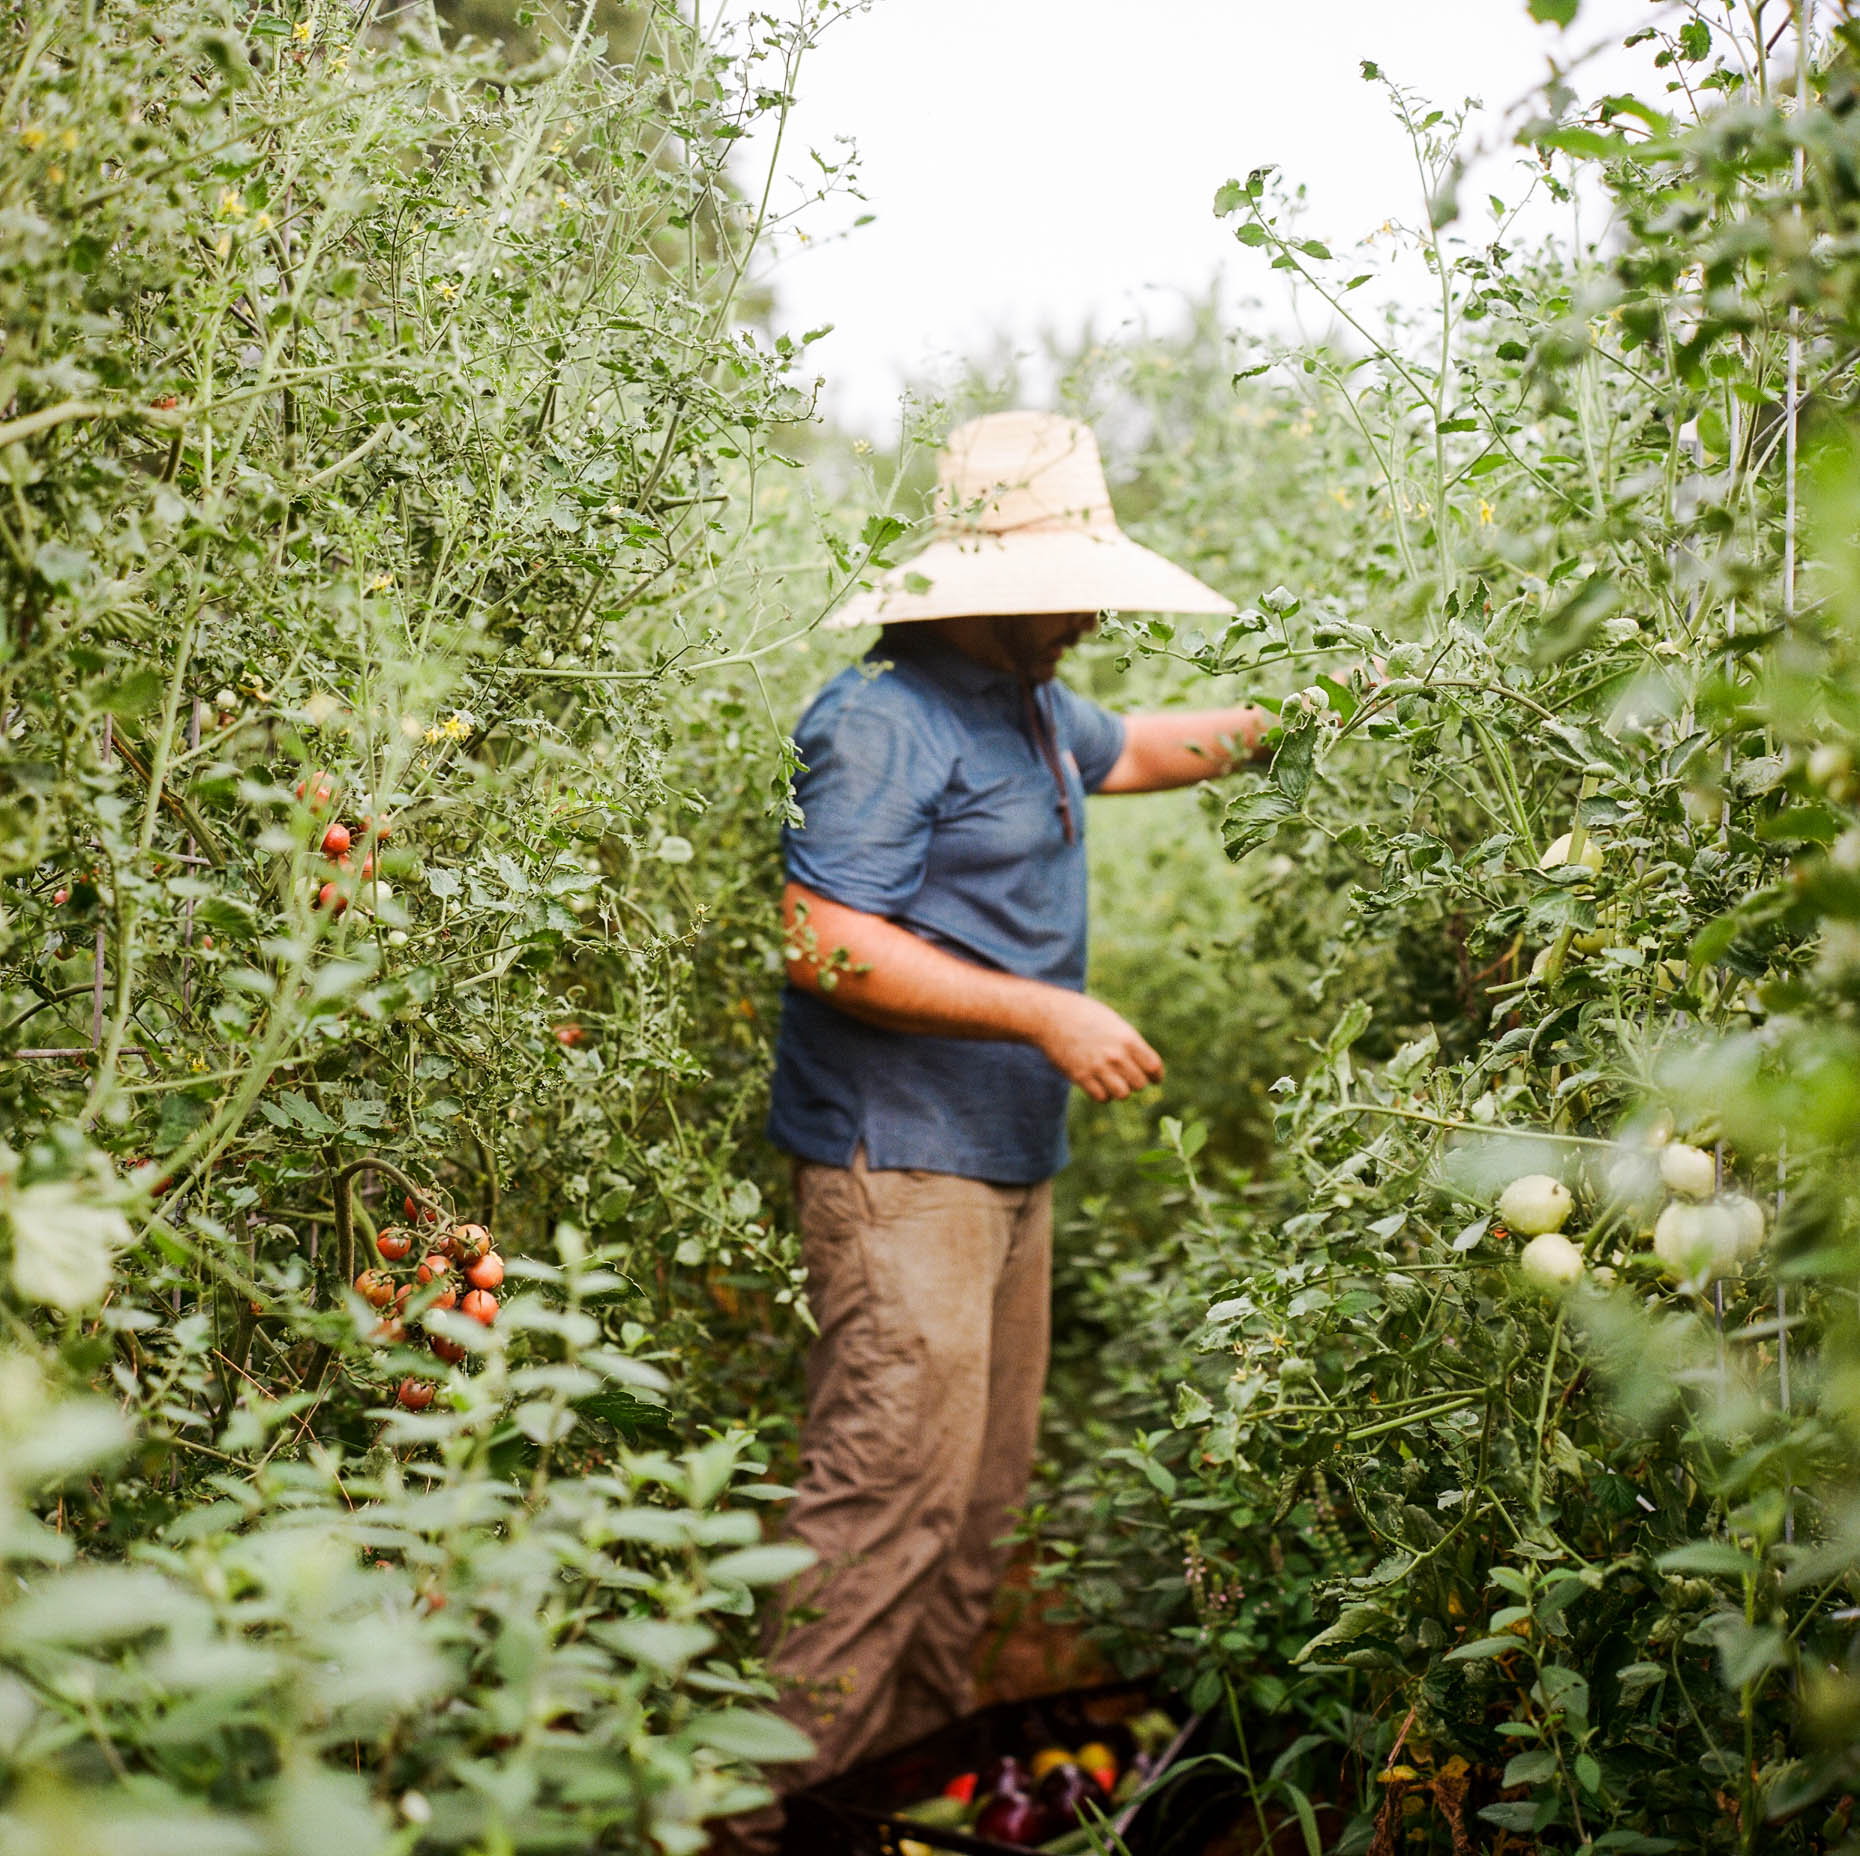 farmer harvesting produce at an organic farm in texas